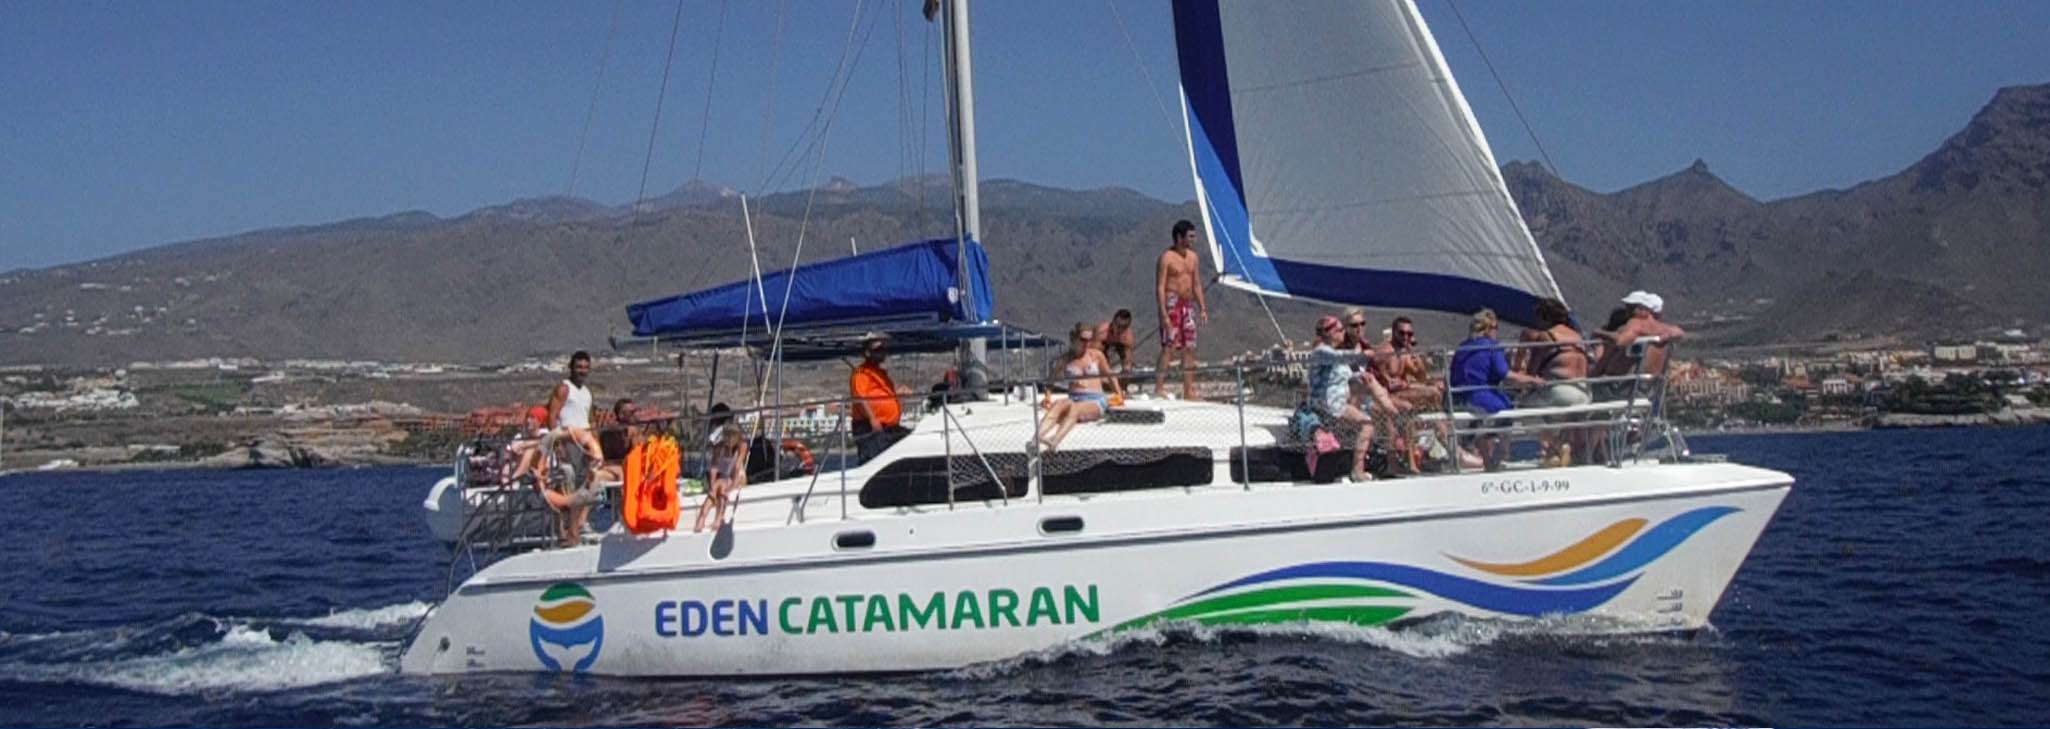 eden catamaran reviews